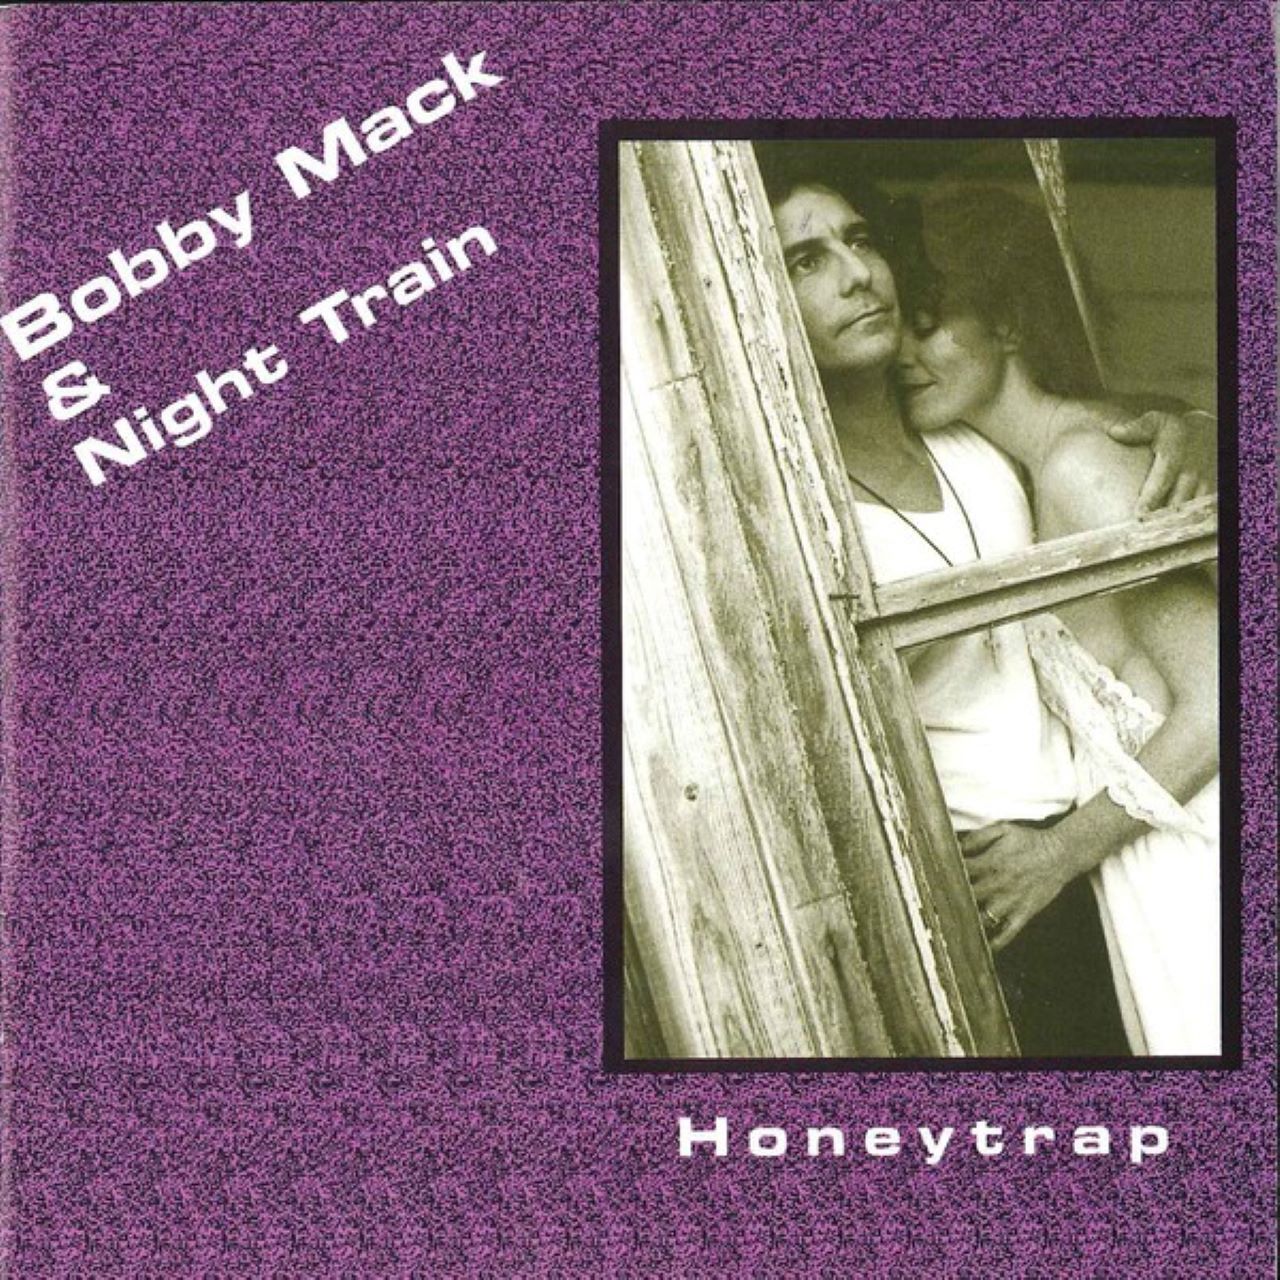 Bobby Mack & Night Train – Honeytrap cover album